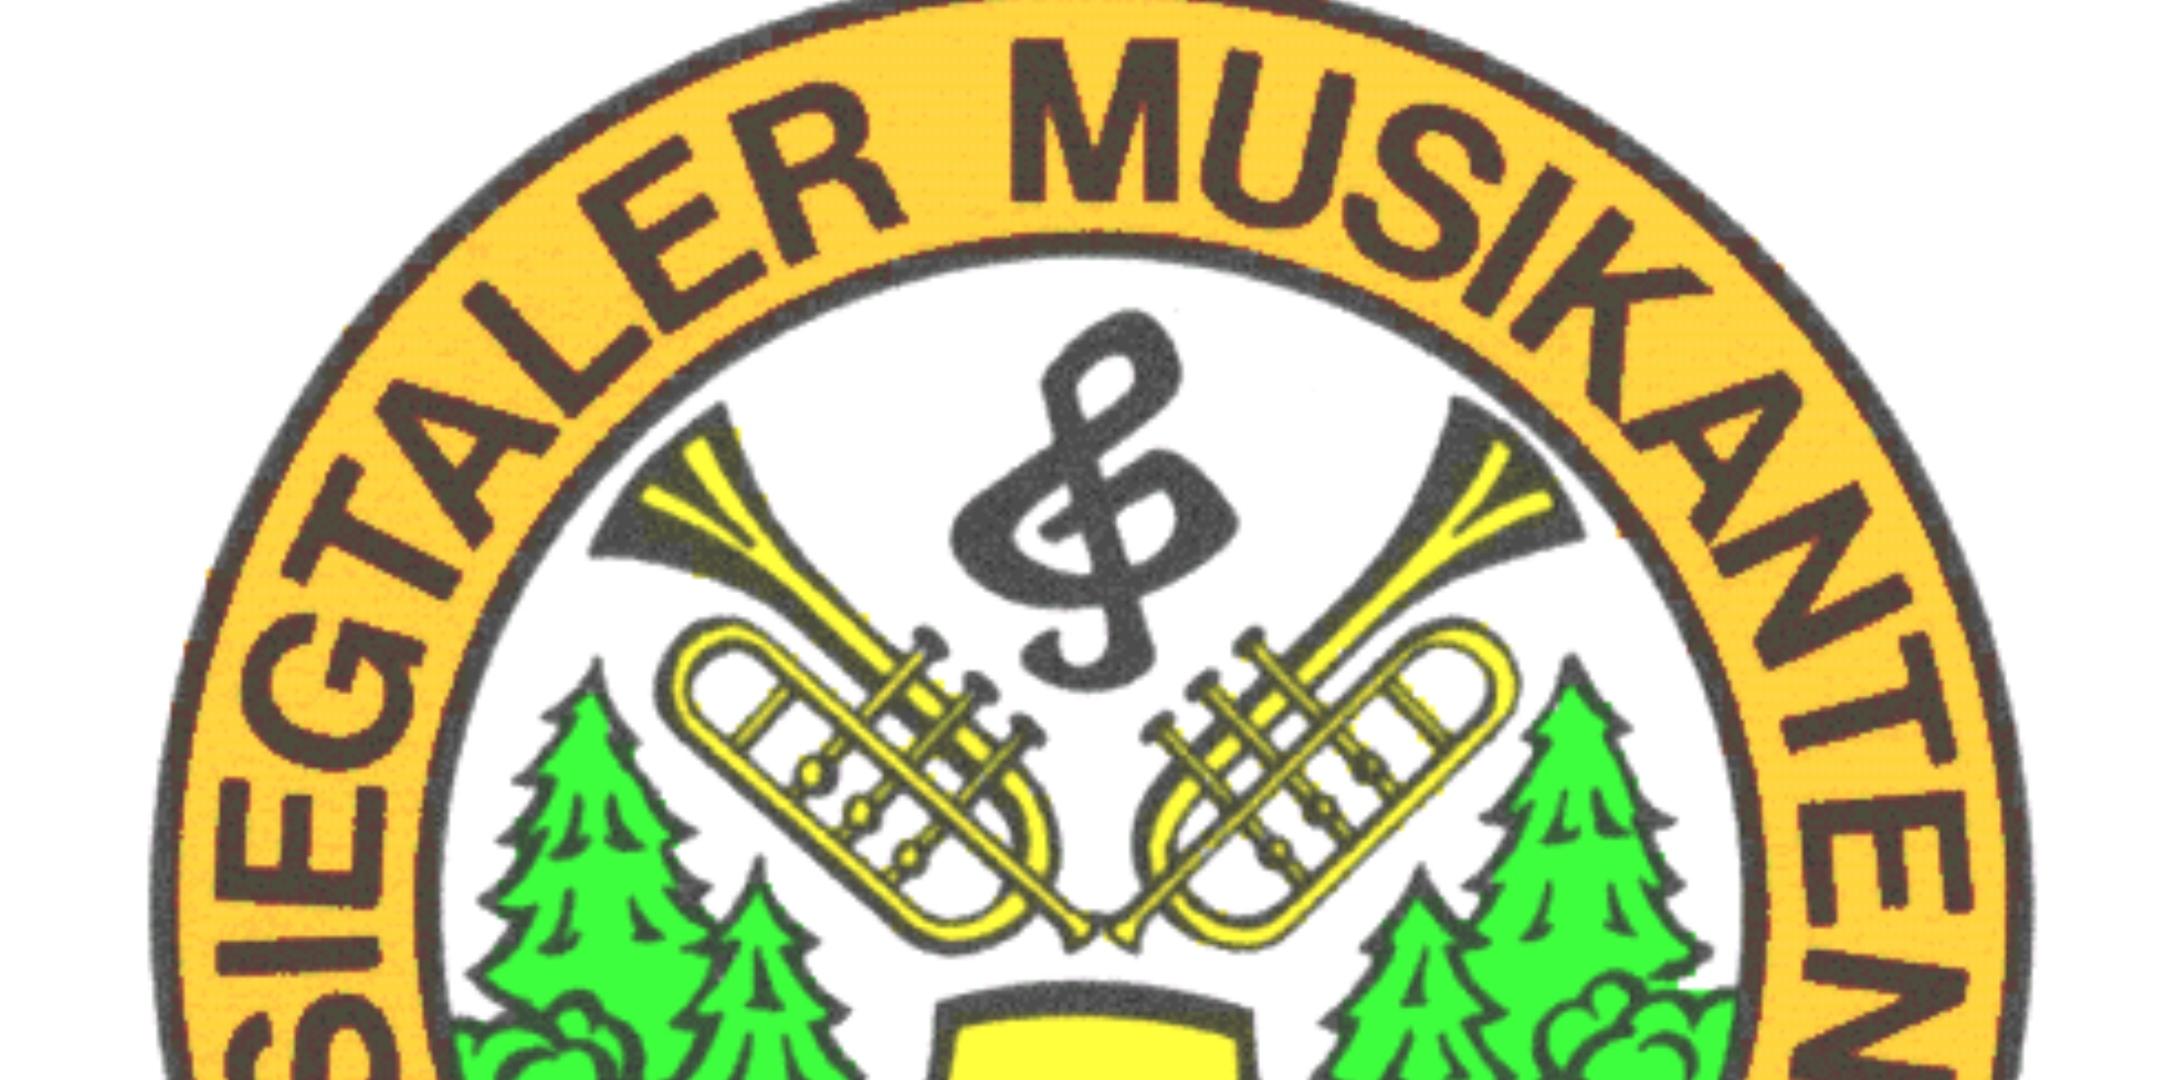 Siegtaler Musikanten Logo